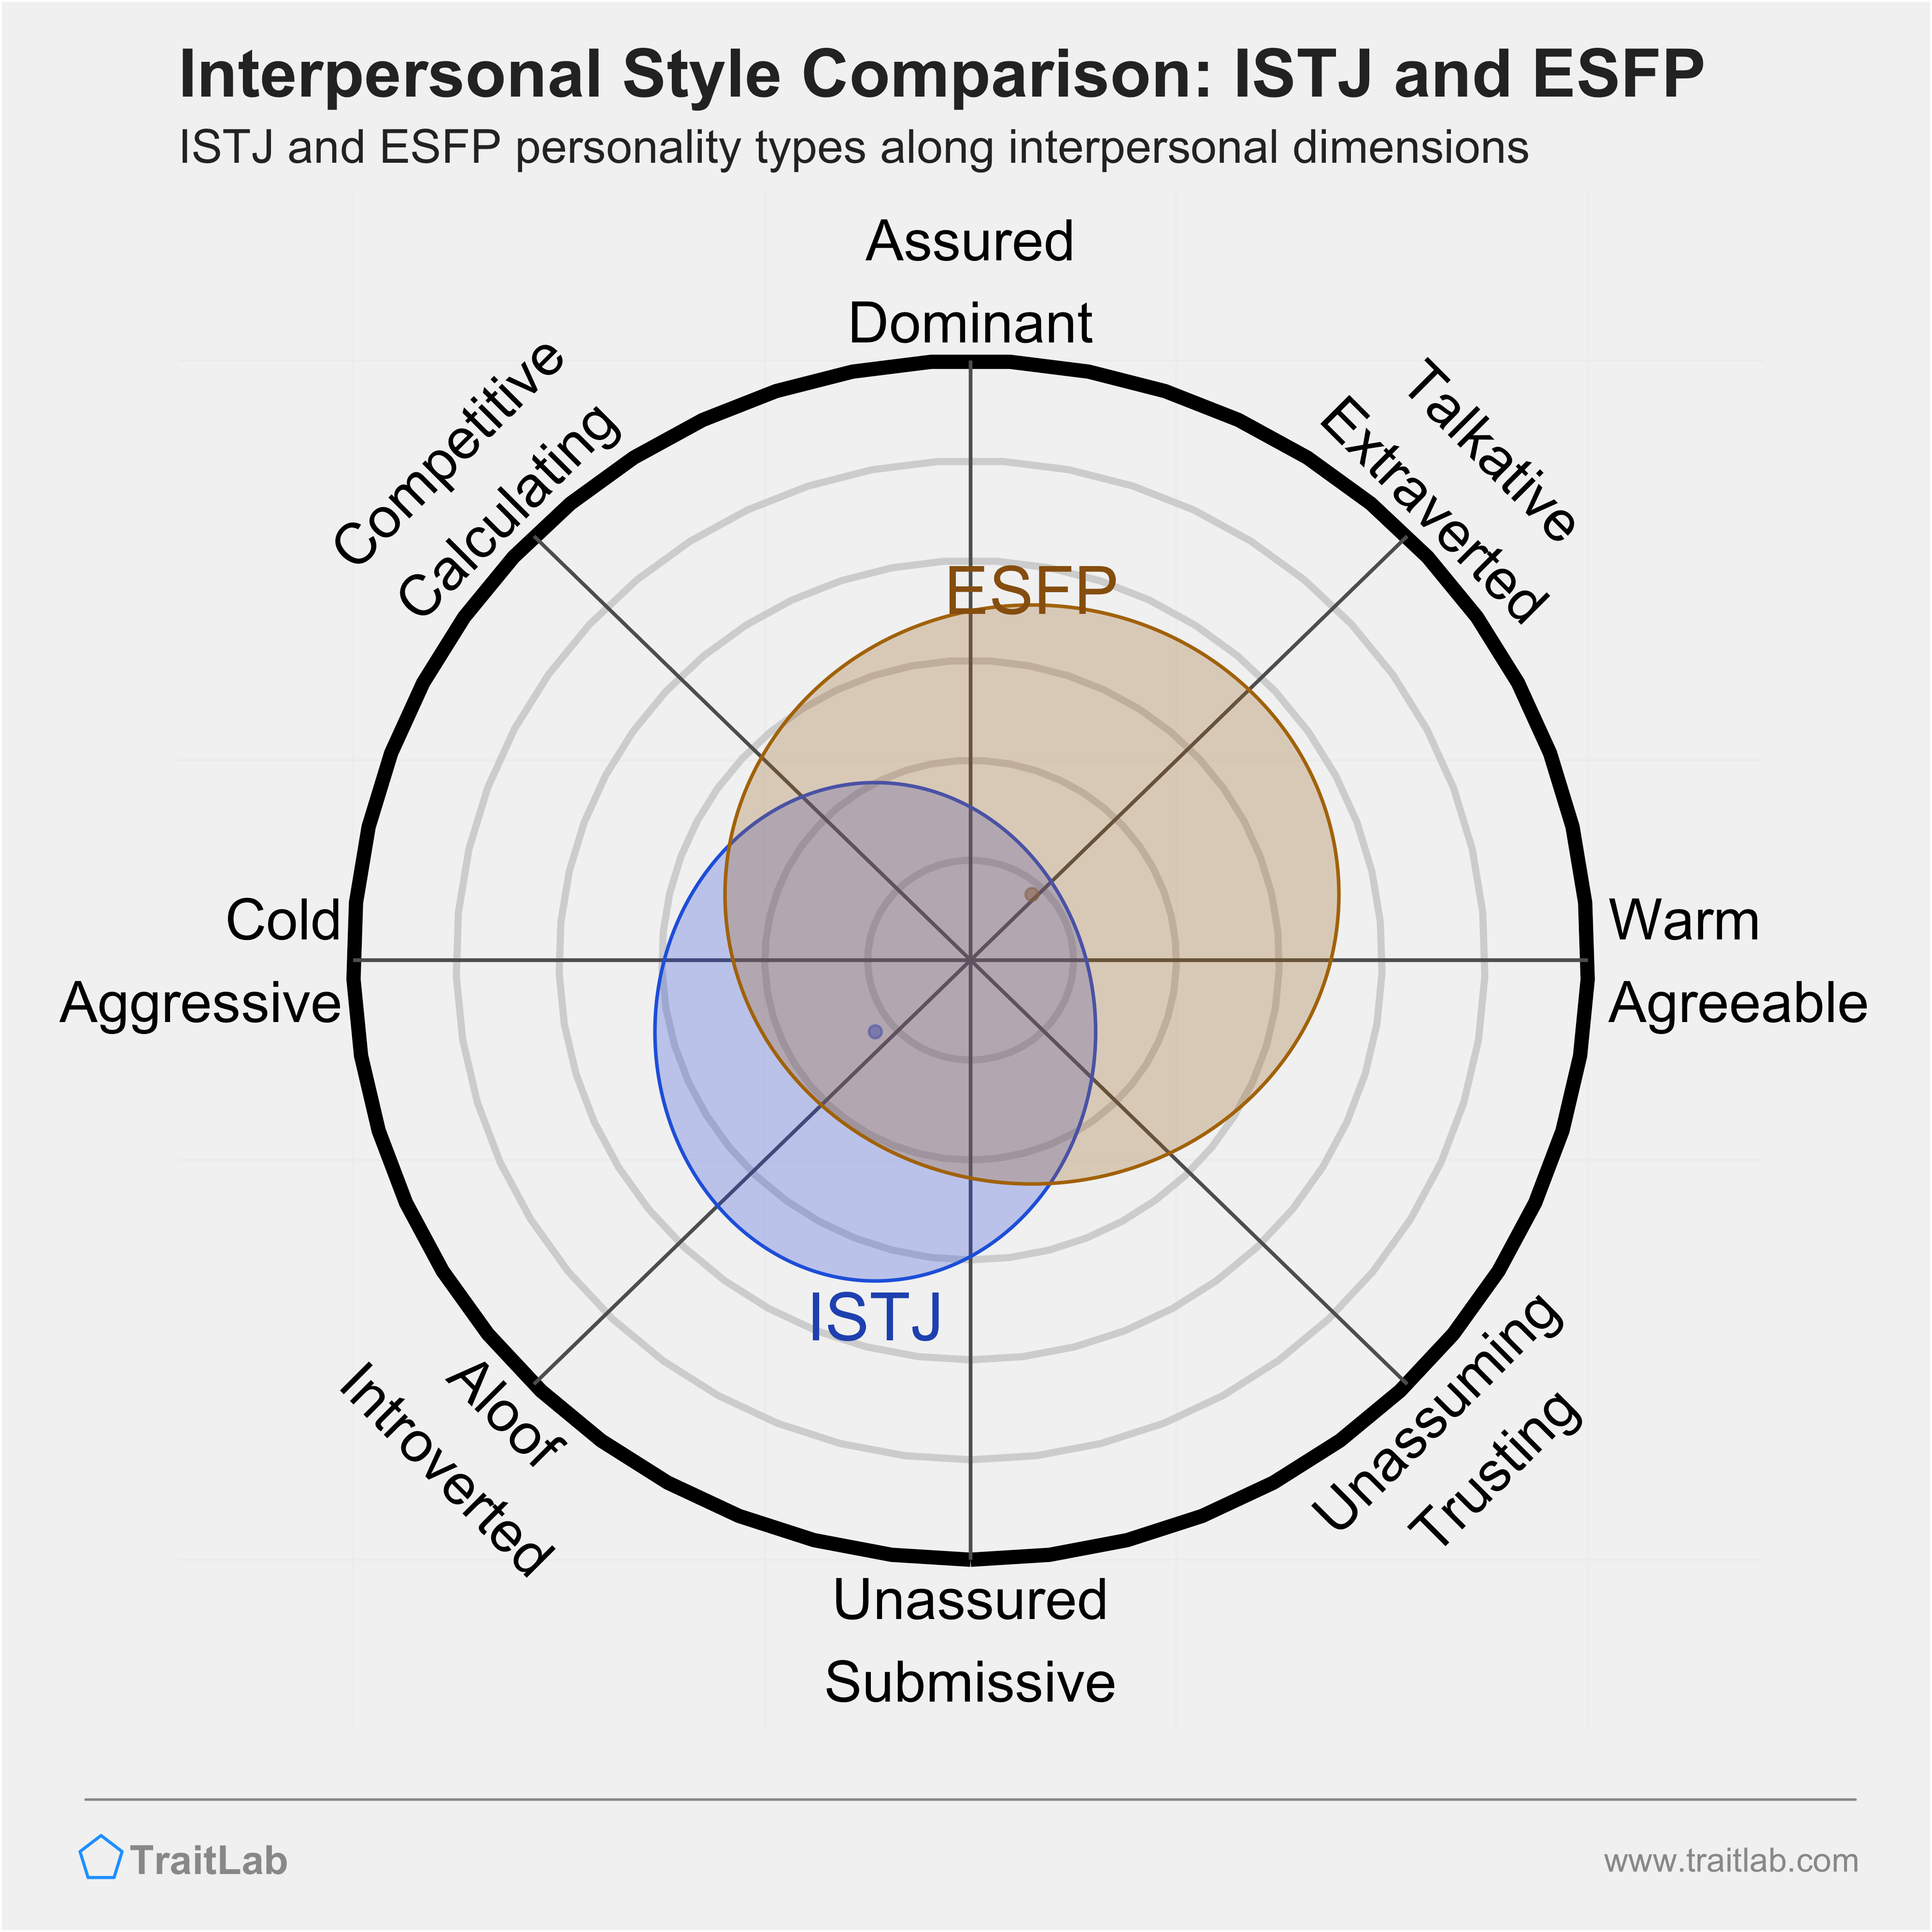 ISTJ and ESFP comparison across interpersonal dimensions